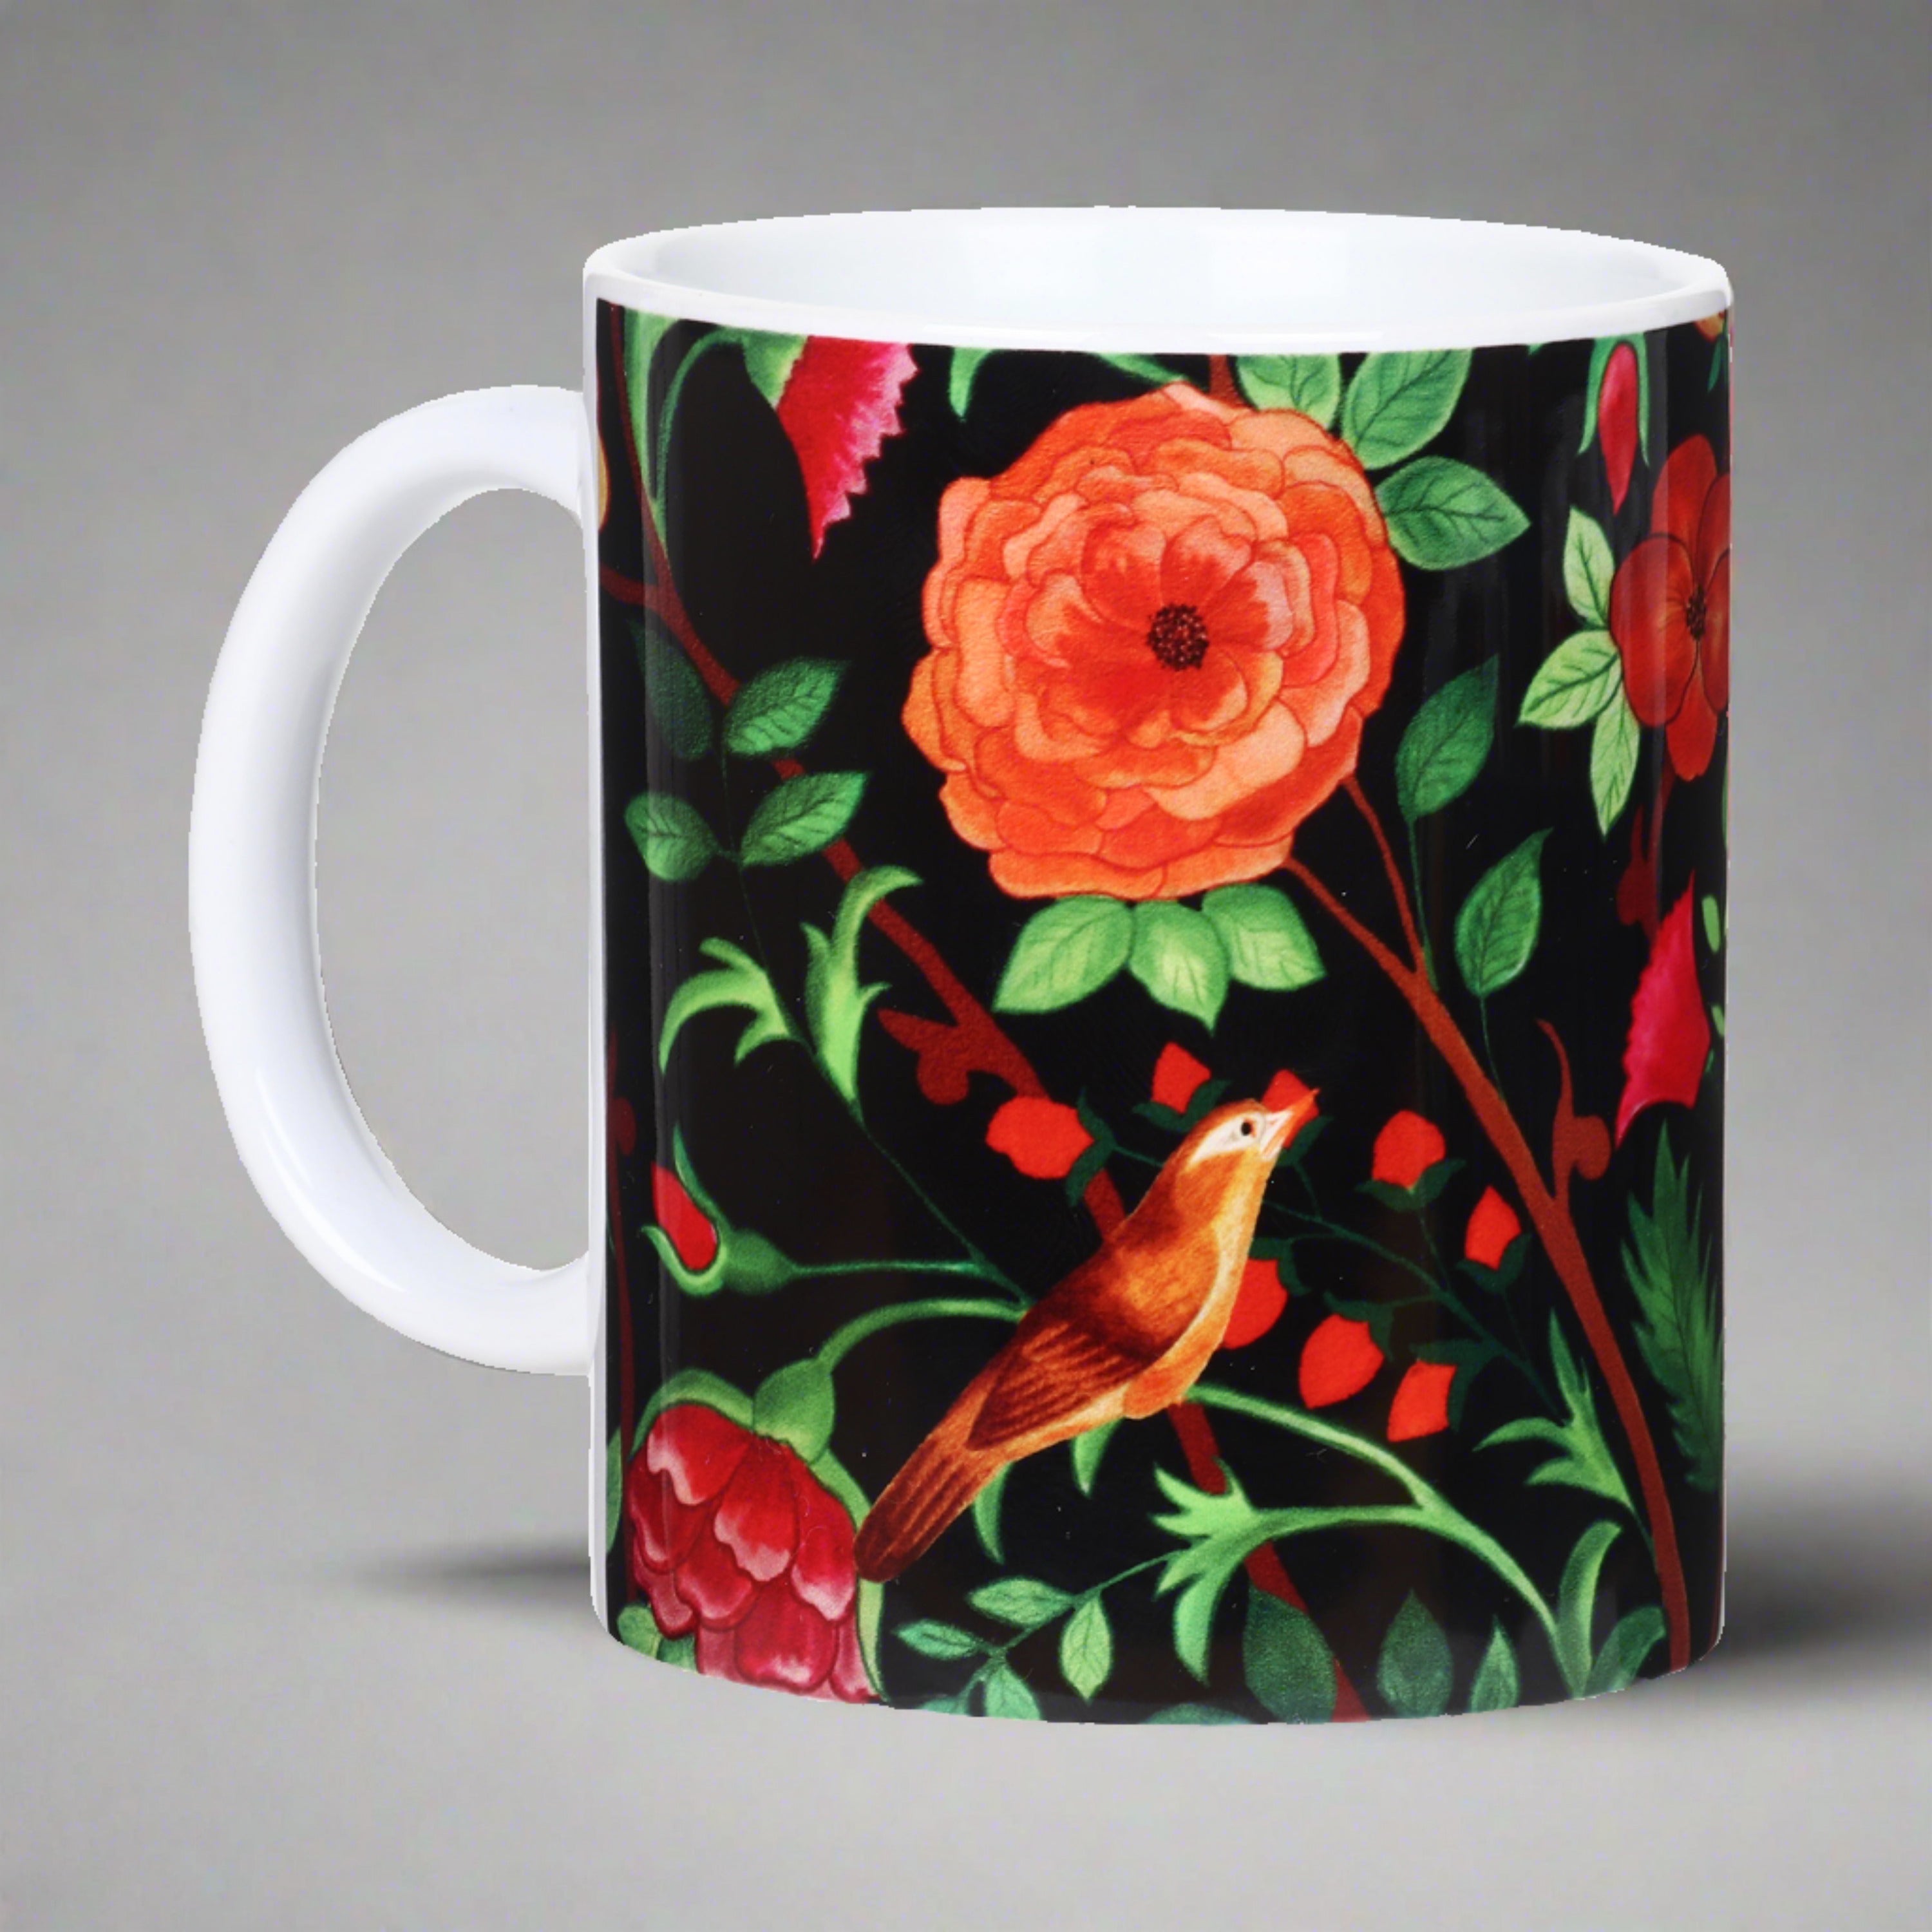 Classic Mugs - Floral Lush